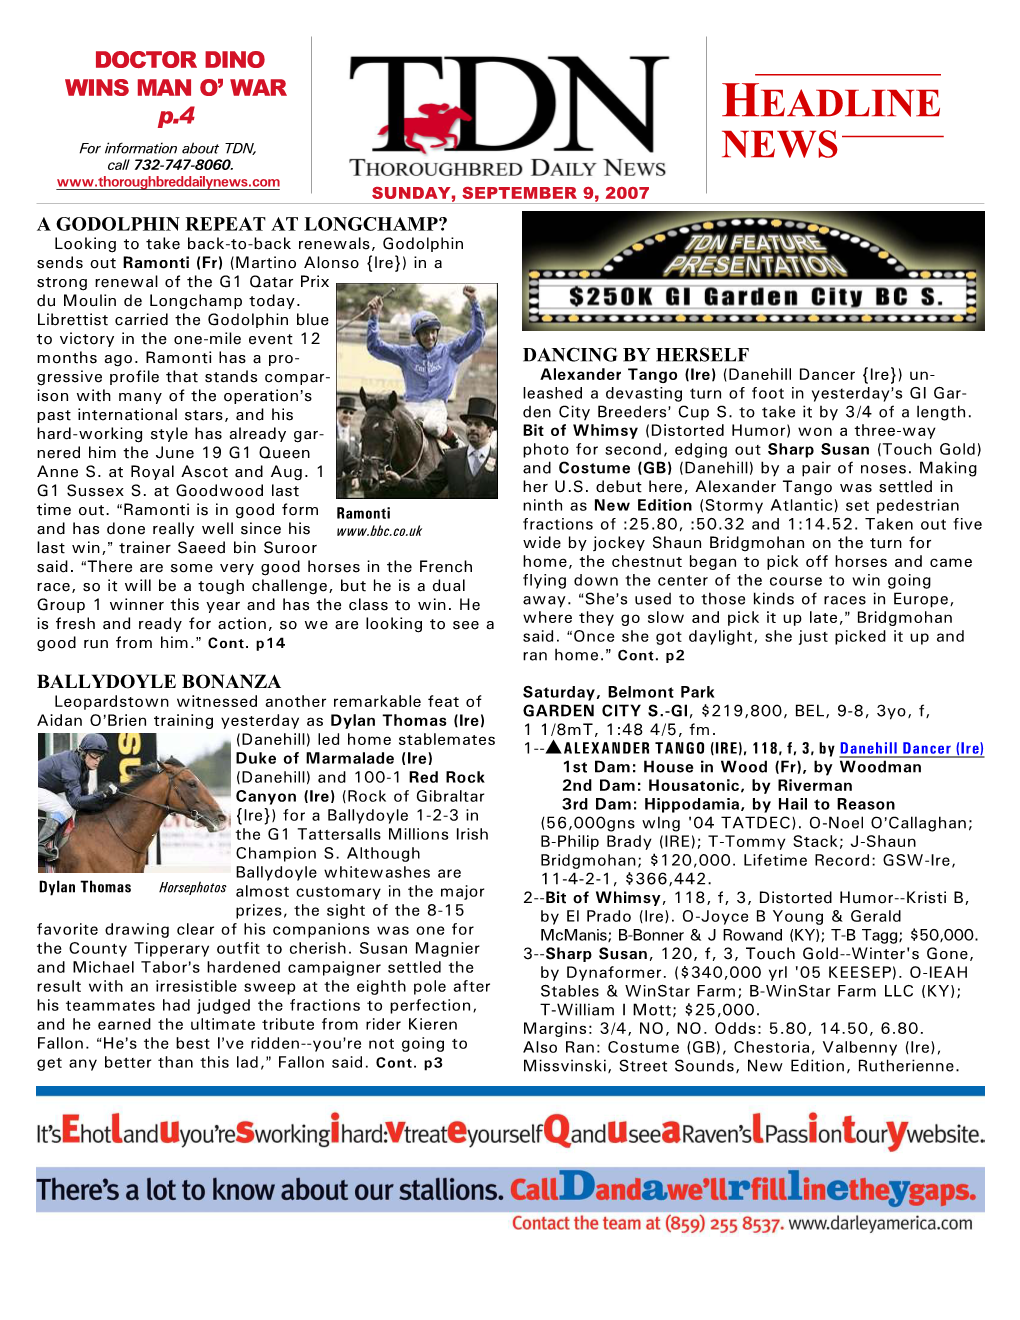 HEADLINE NEWS • 9/9/07 • PAGE 2 of 16